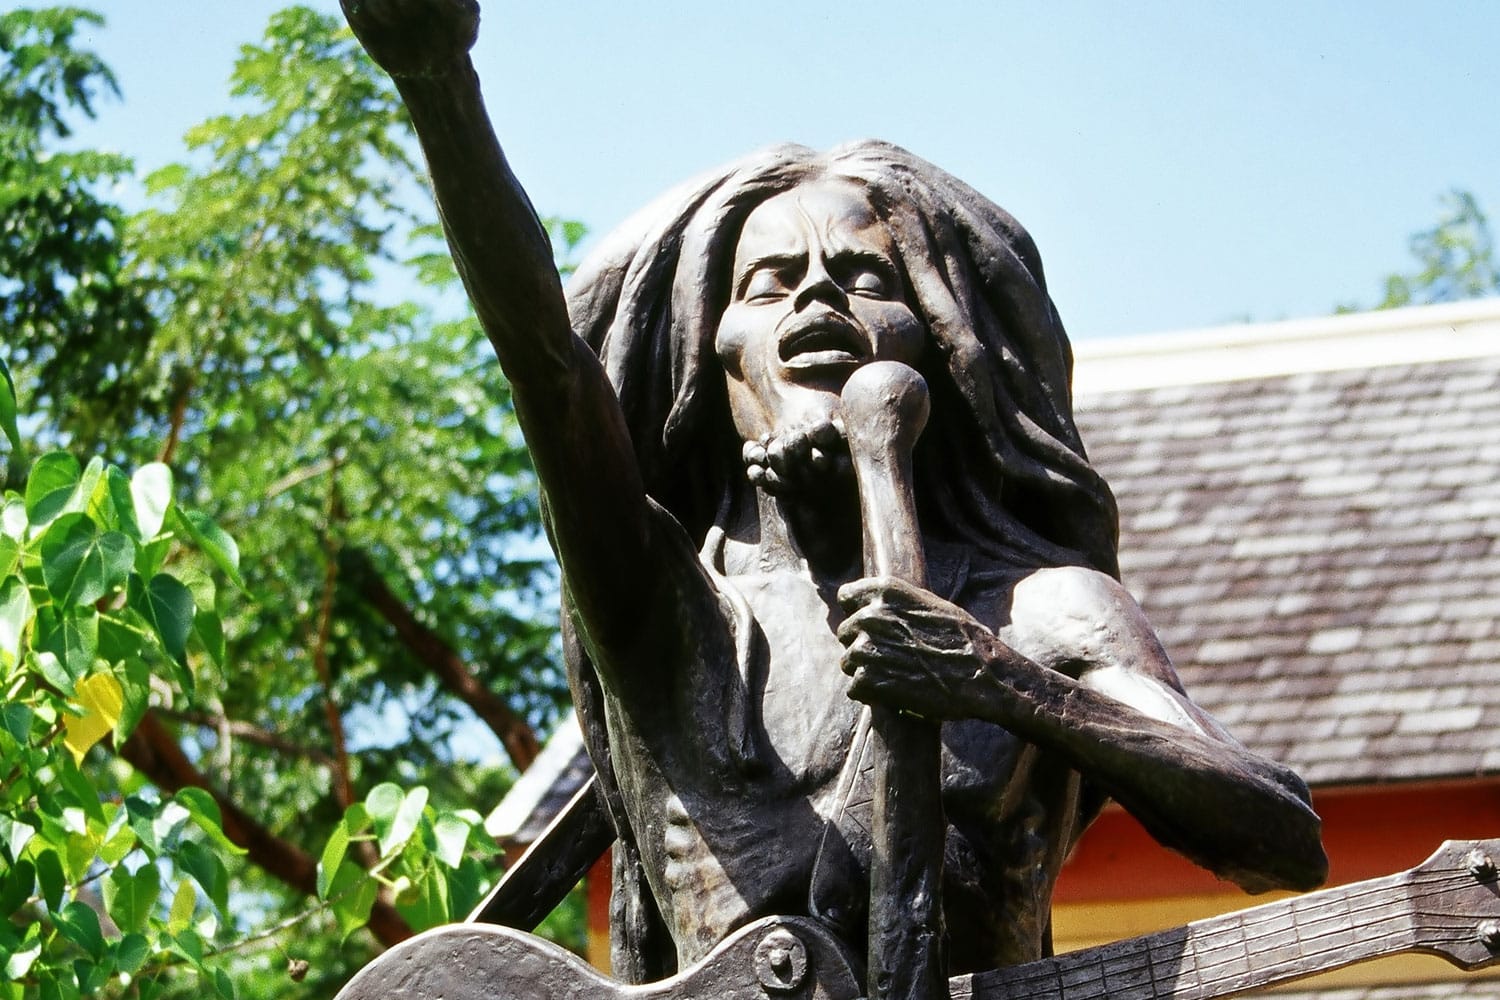 Bob Marley statue in Jamaica